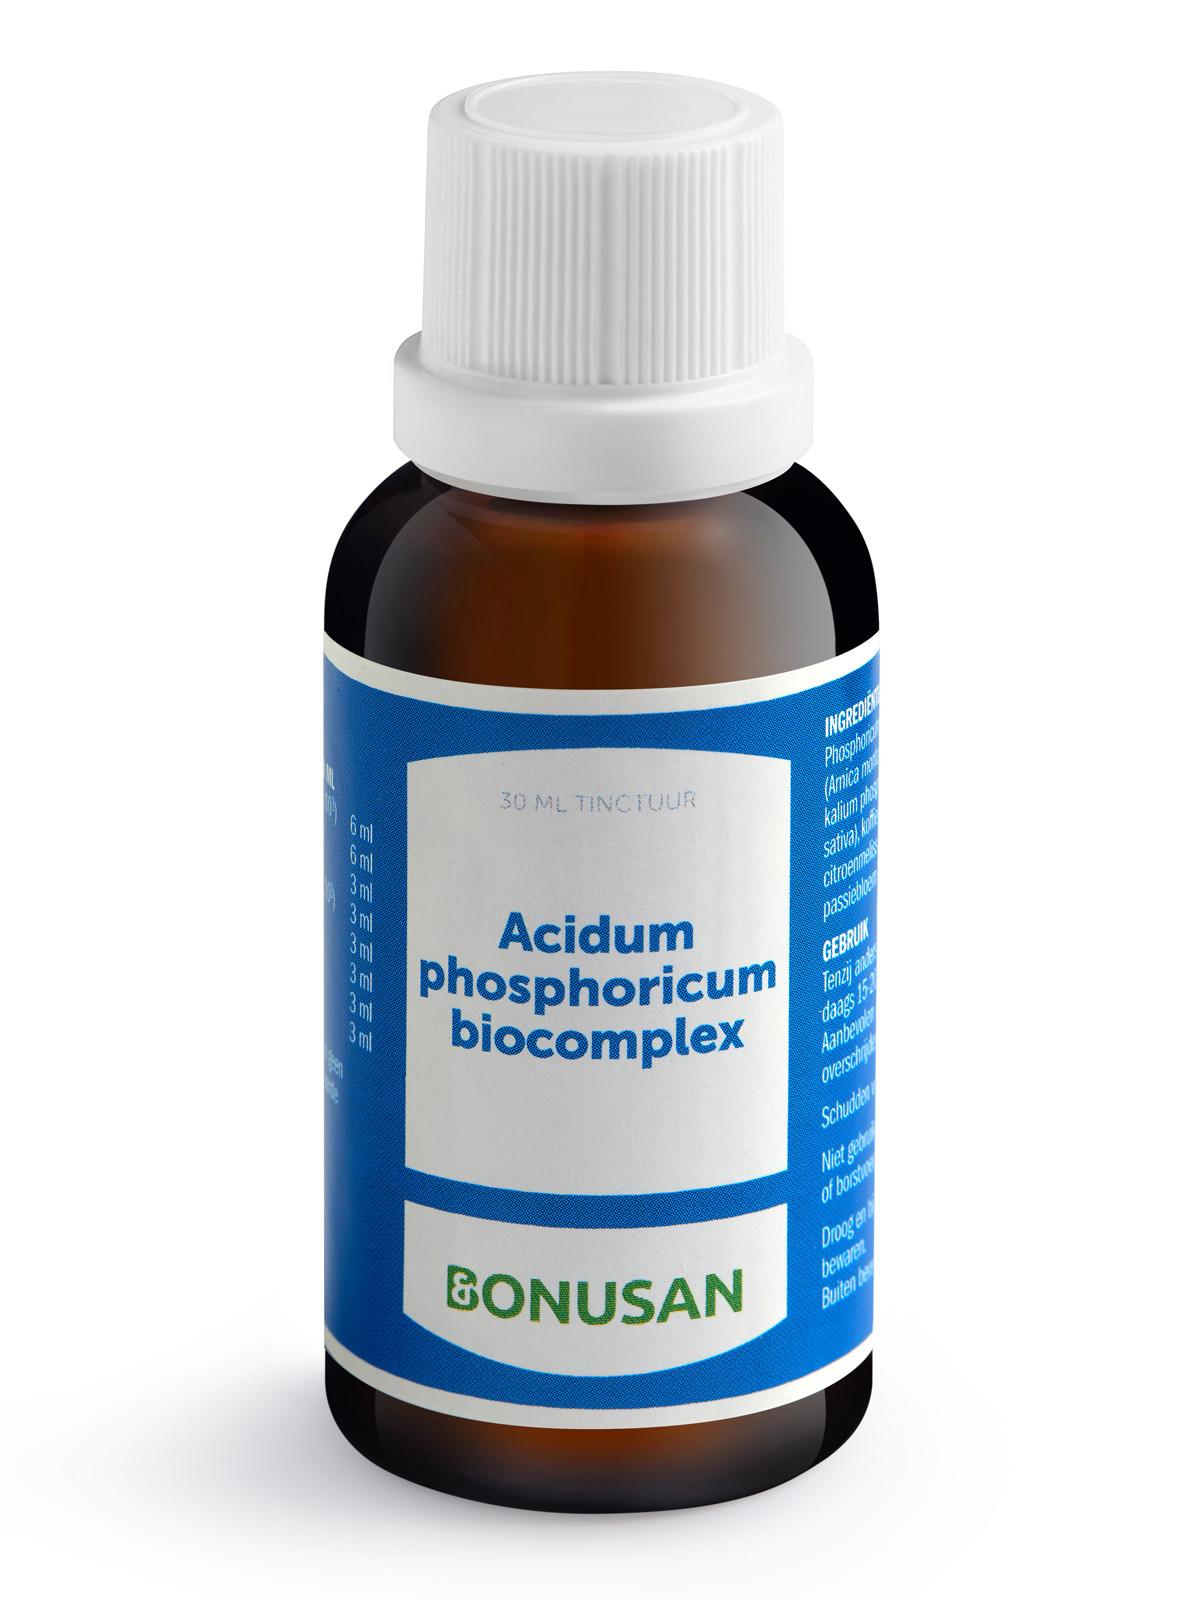 Bonusan - Acidum phosphoricum biocomplex